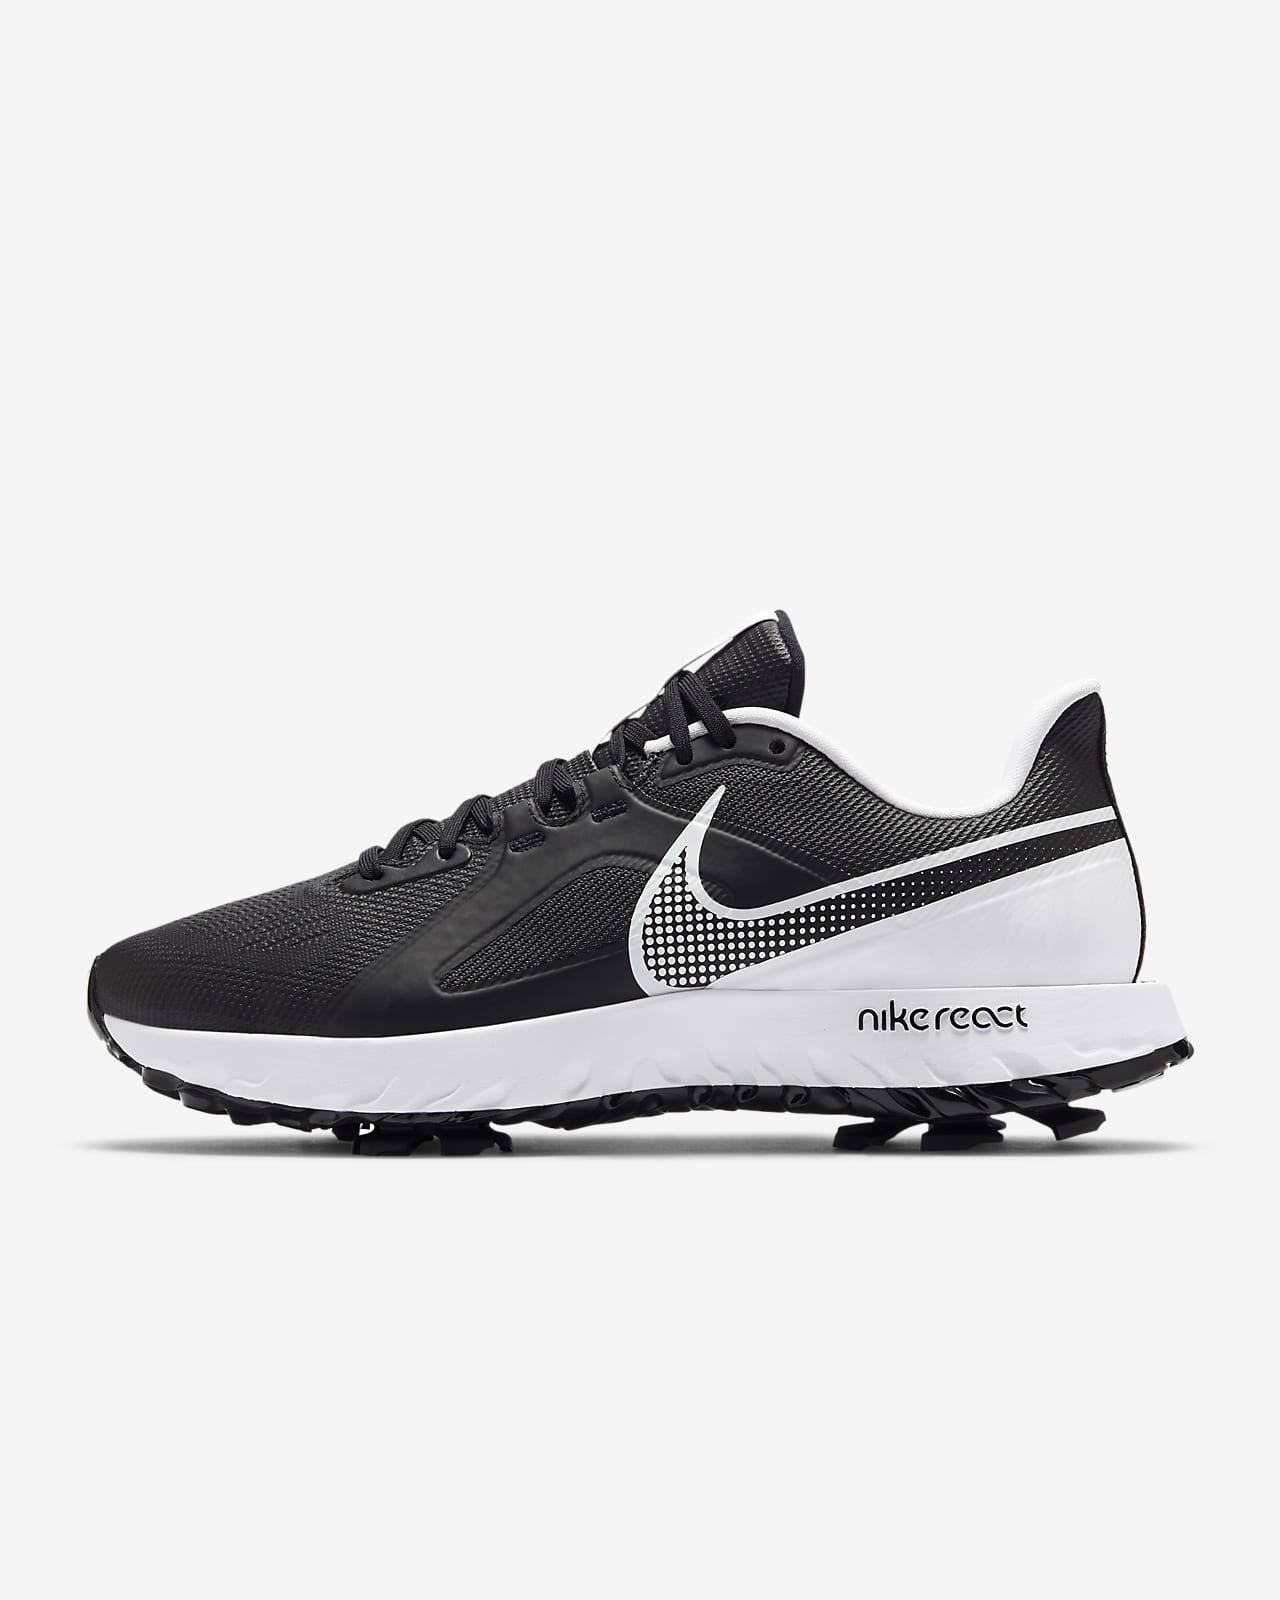 Nike React Infinity Pro Golf Shoes 